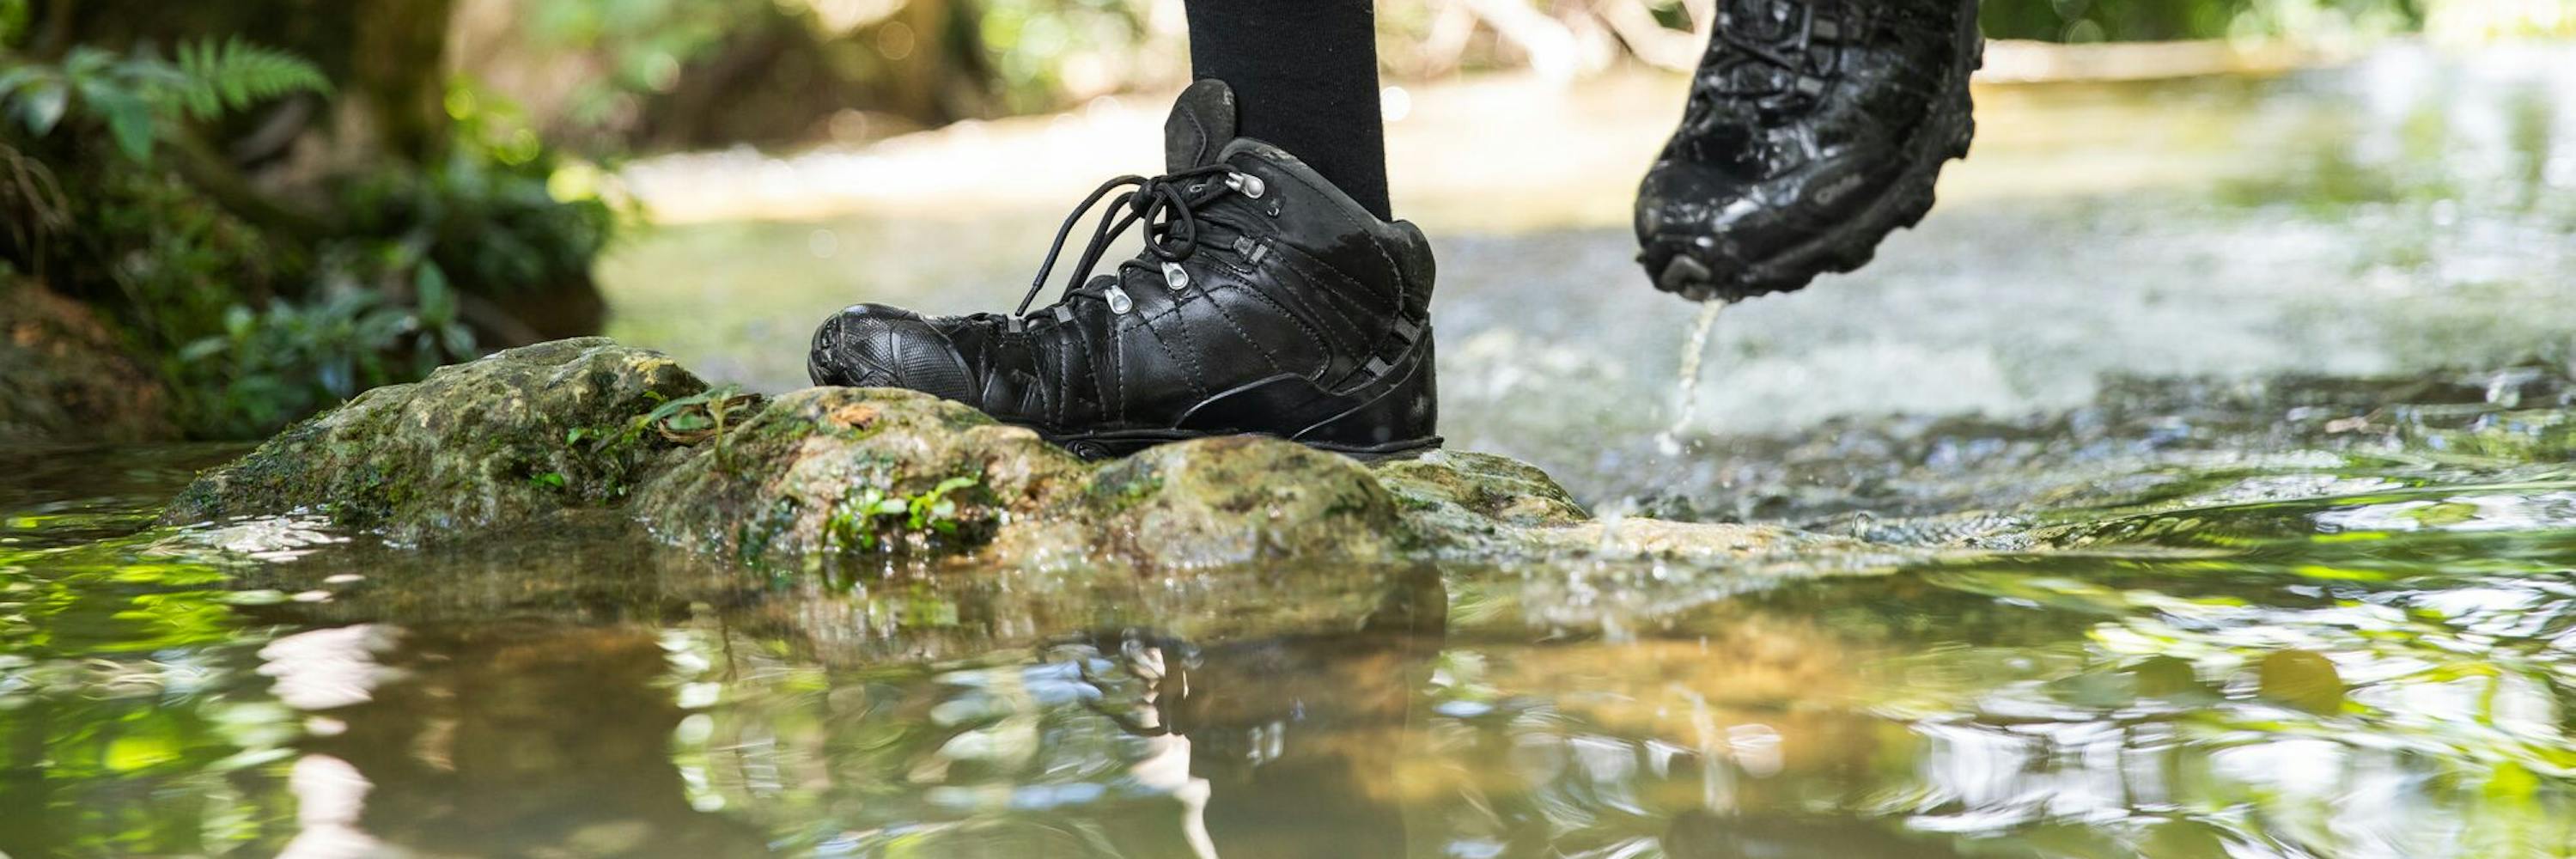 Re-waterproofing your hiking boots | Kathmandu UK